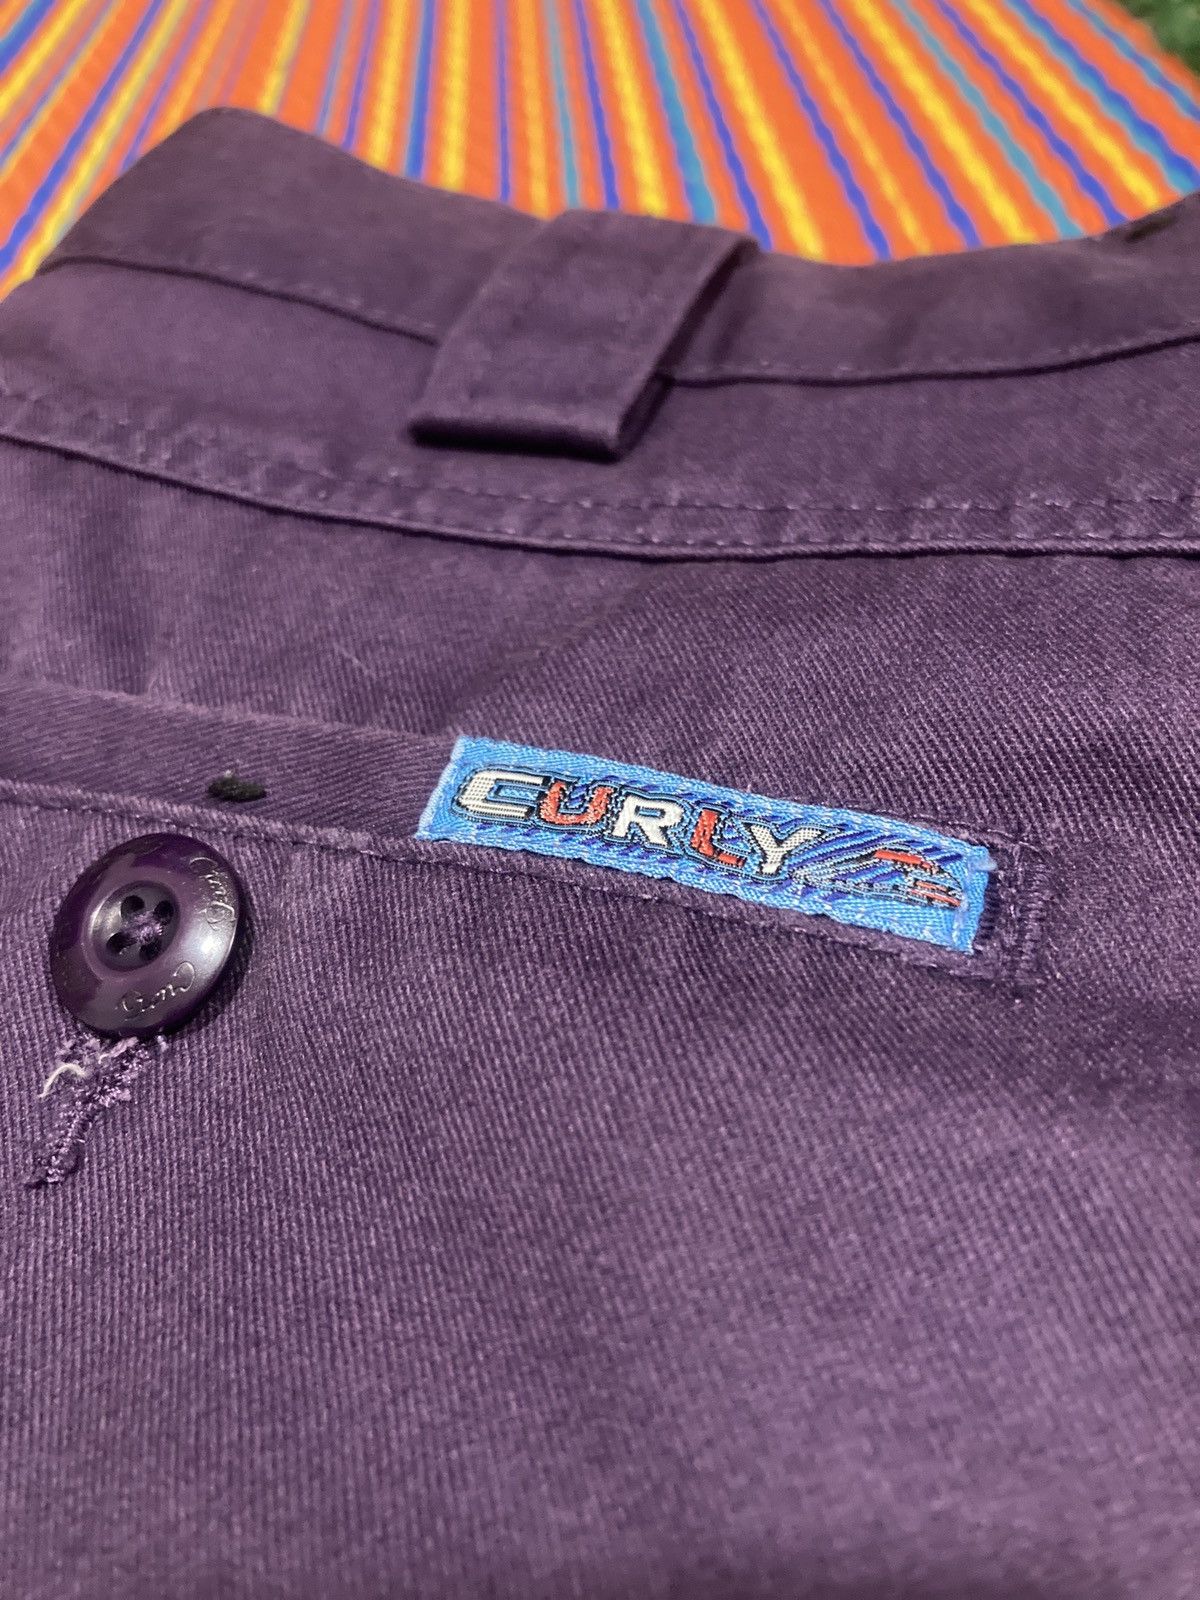 Vintage vintage 90’s y2k curly purple baggy work skate shorts Size US 38 / EU 54 - 5 Thumbnail